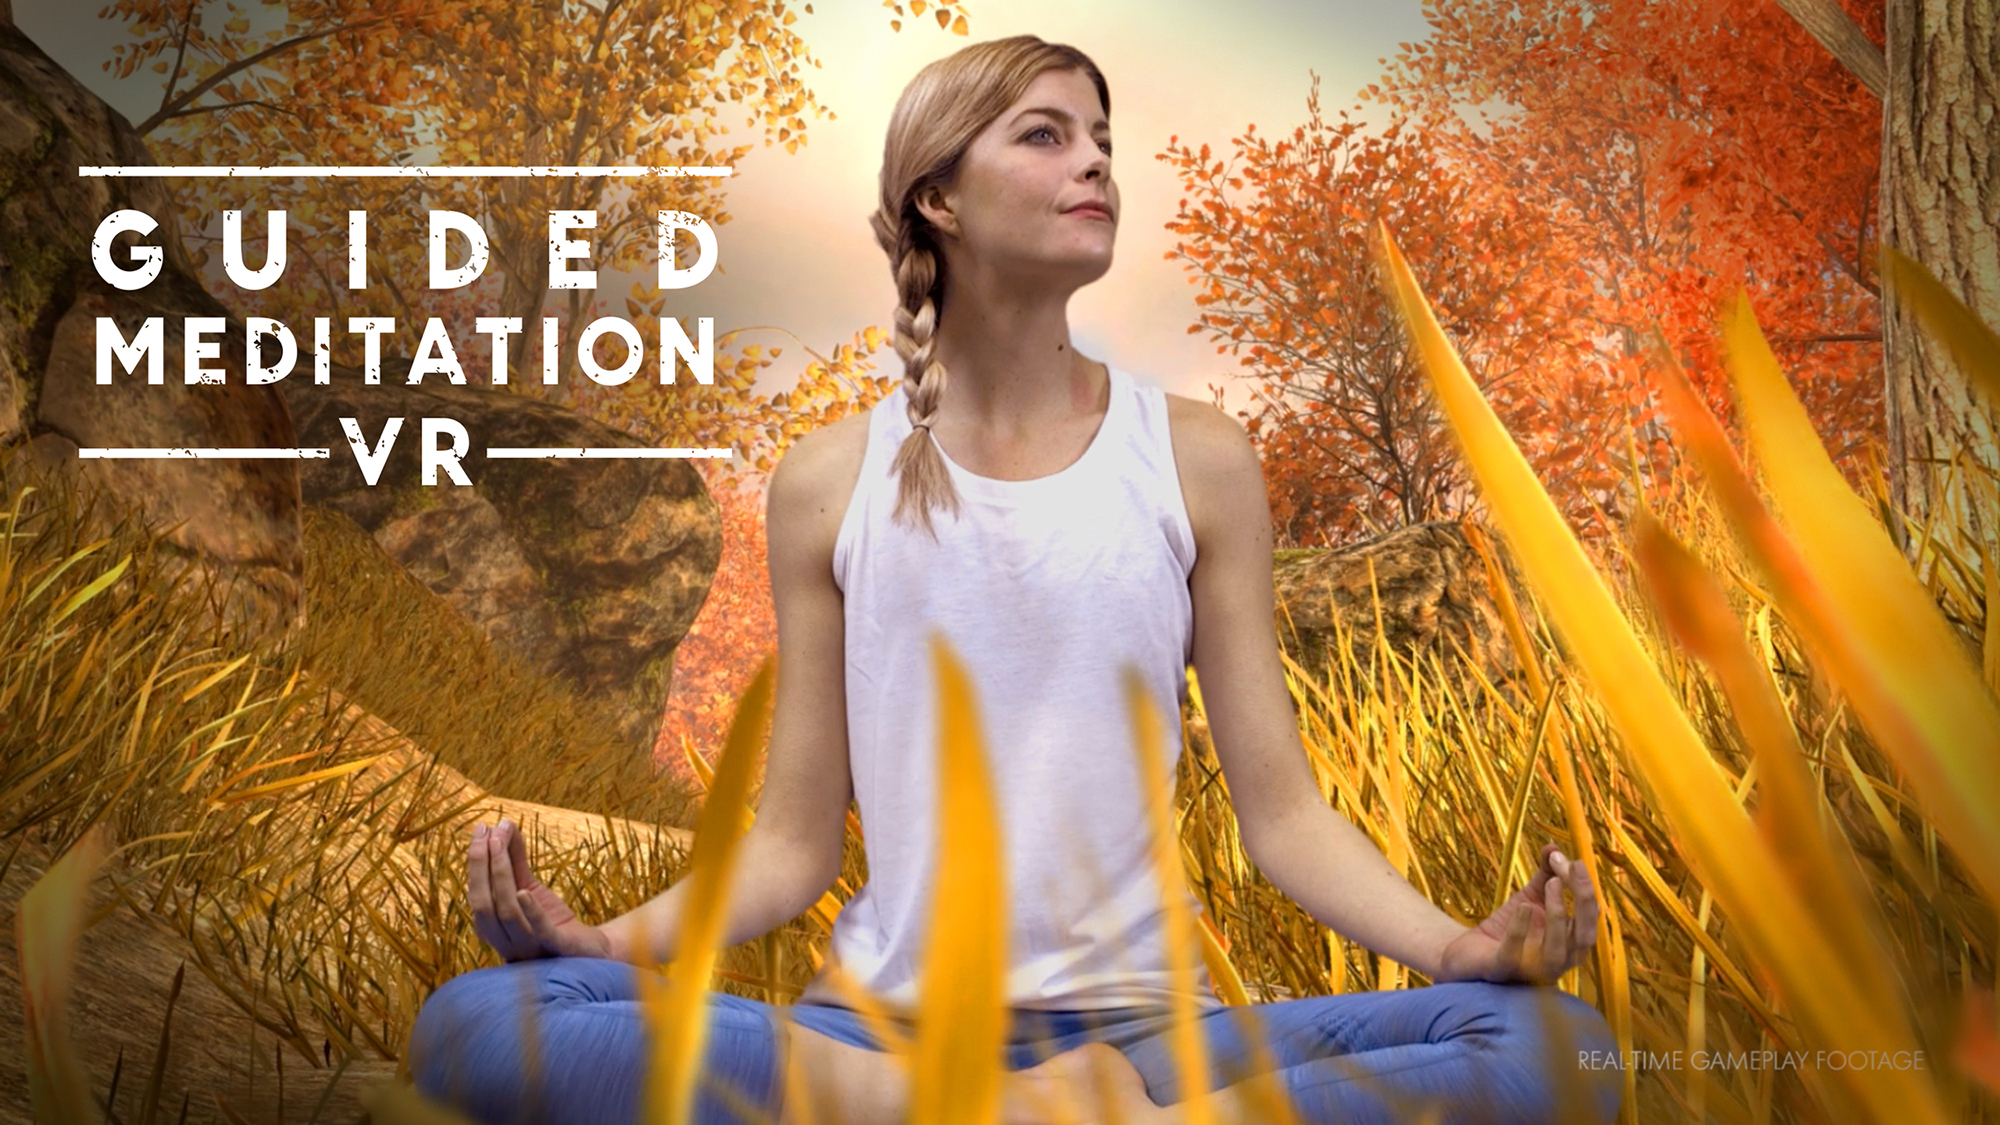 Guided meditation. VR Meditation. Guided Meditation VR. Oculus Quest медитация. Guided Meditation VR Quest.